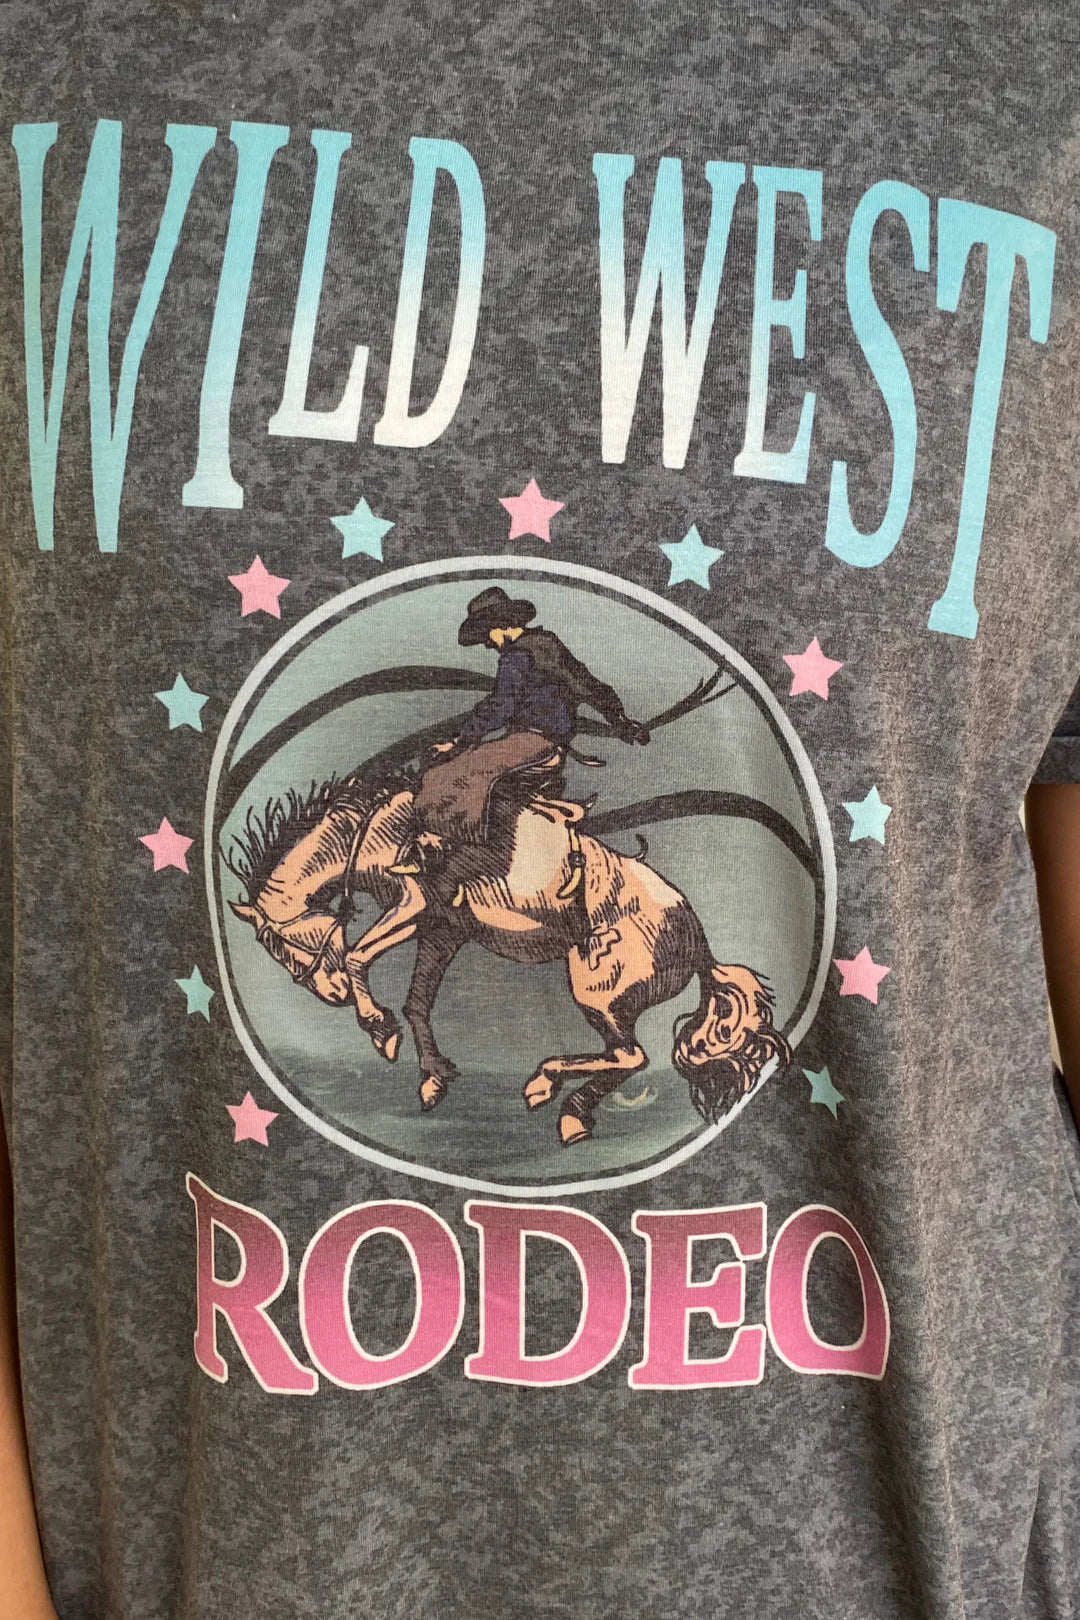 Wild West Rodeo Short Sleeve Top